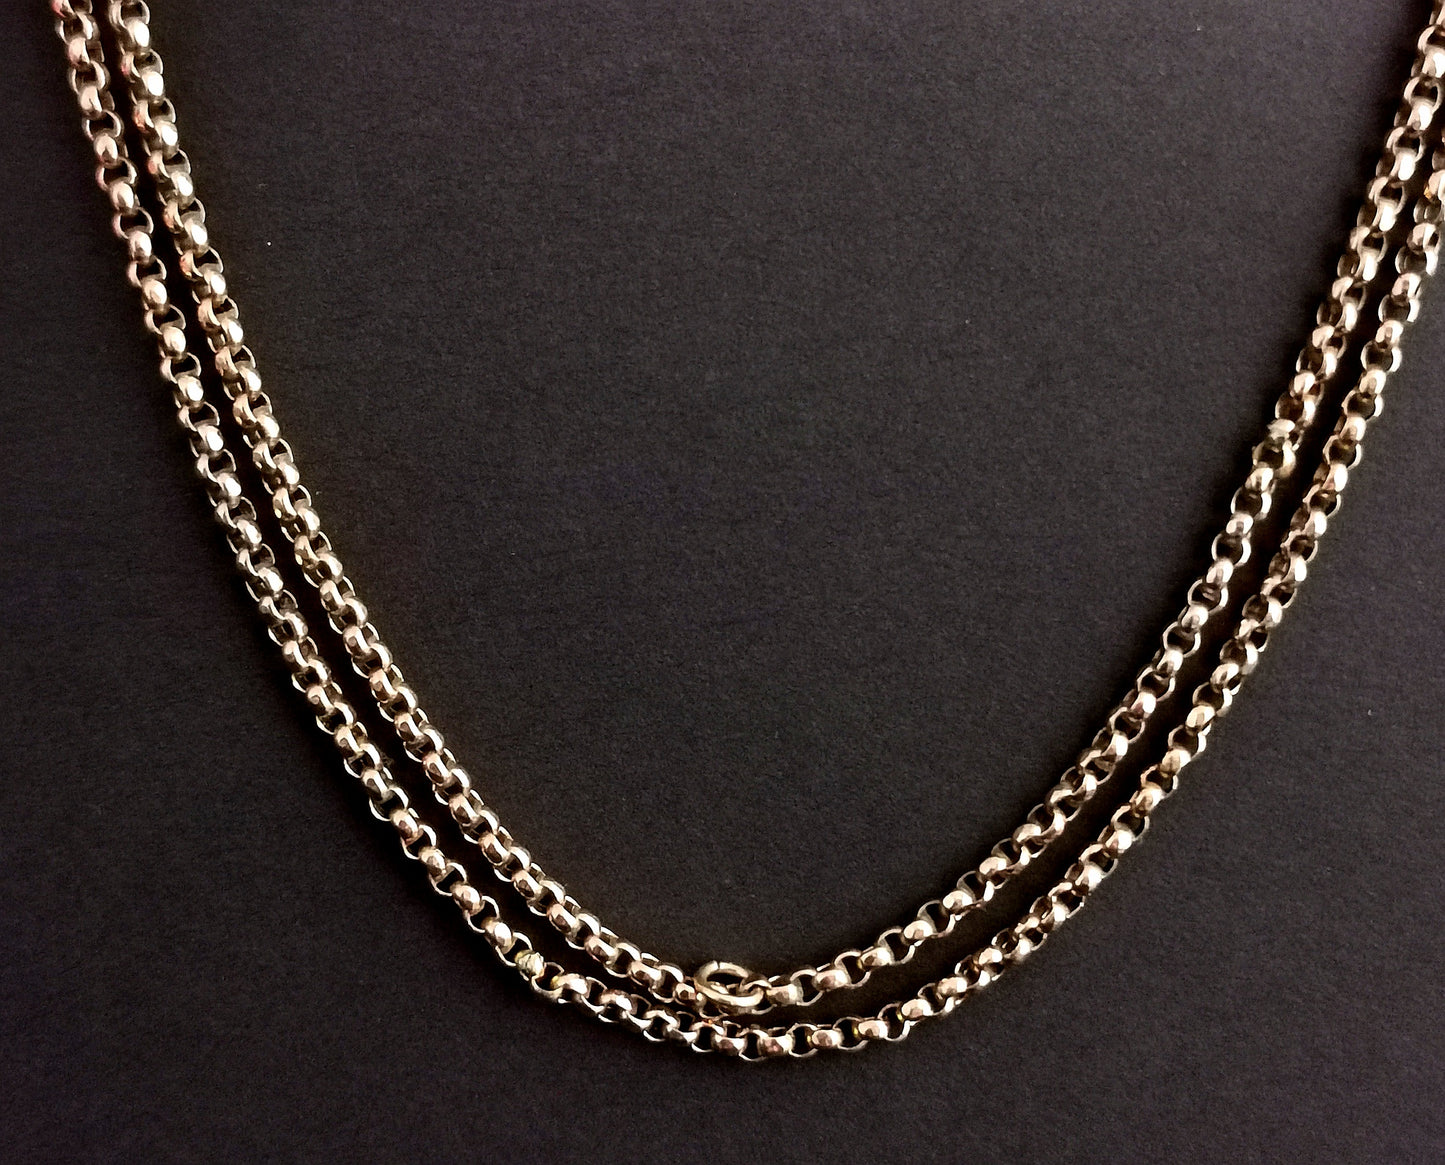 Antique Victorian 9ct gold Belcher link chain necklace